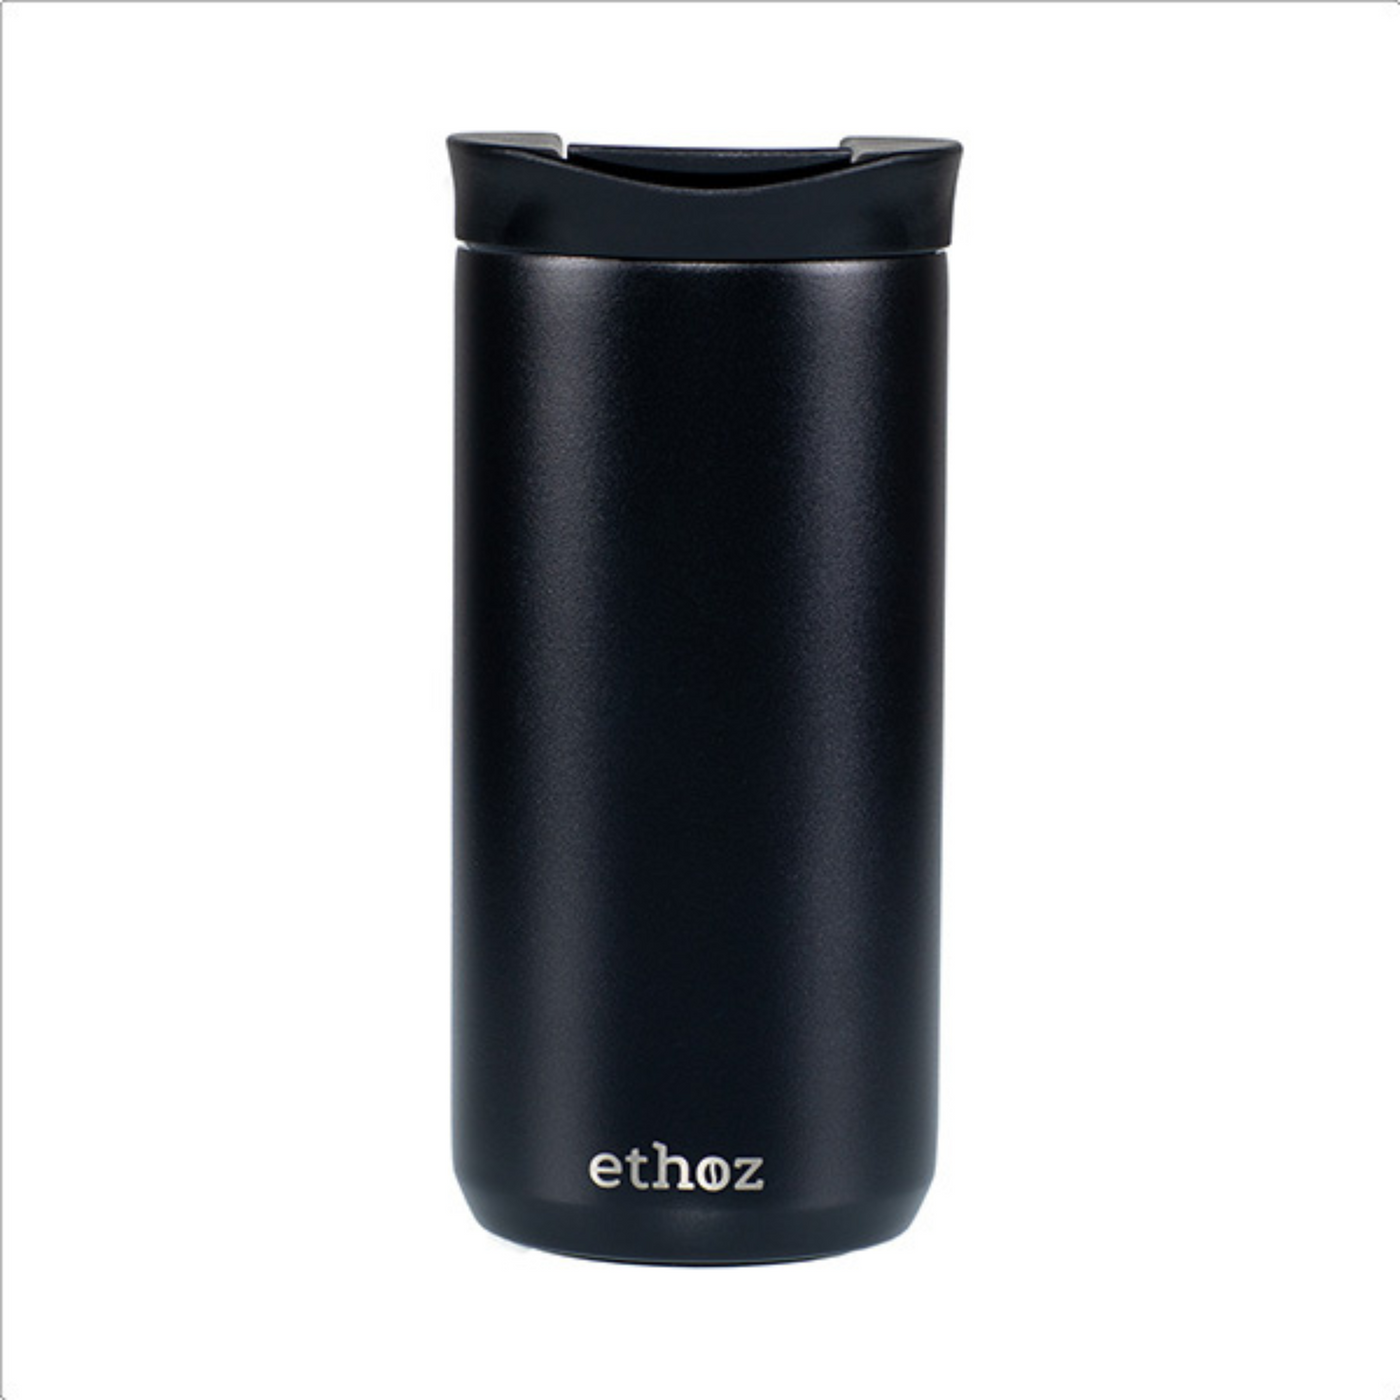 black travel mug showing ethoz brand